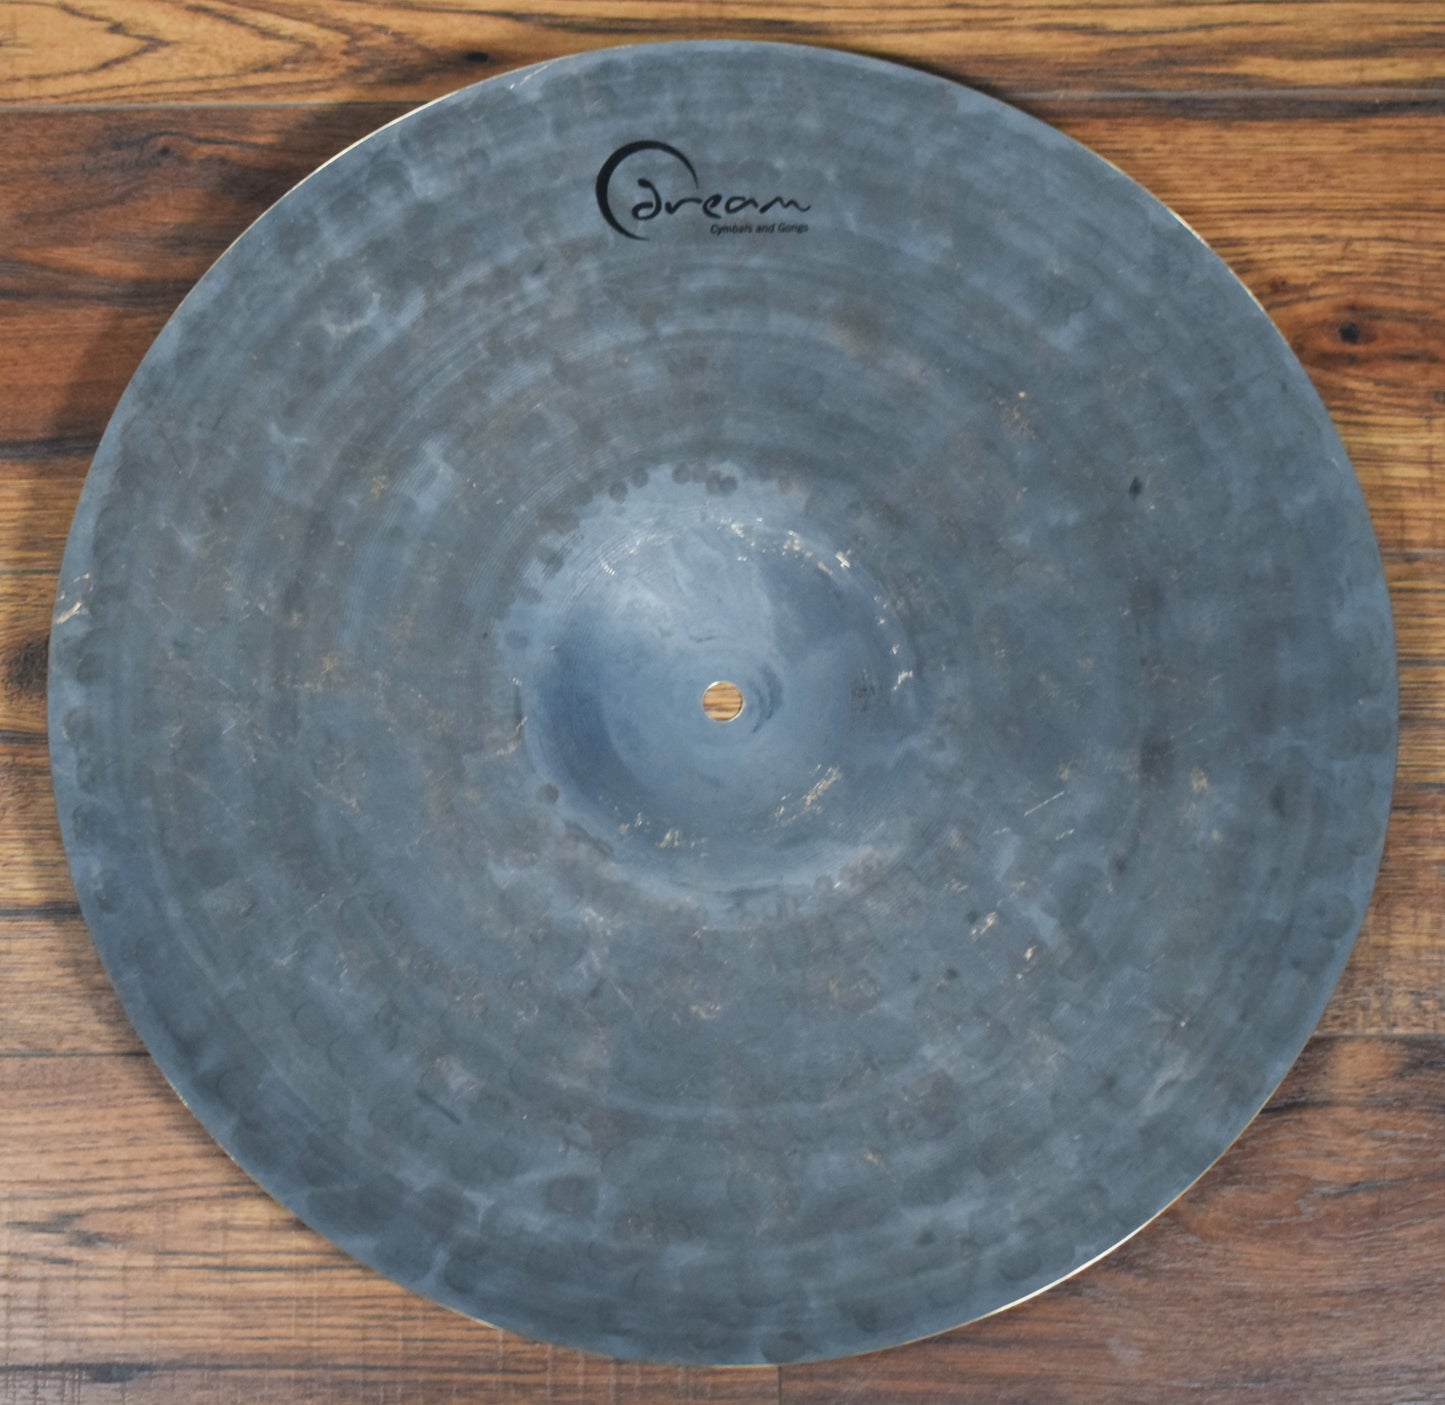 Dream Cymbals DMBPT17 Dark Matter Bliss 17" Paper Thin Crash Cymbal